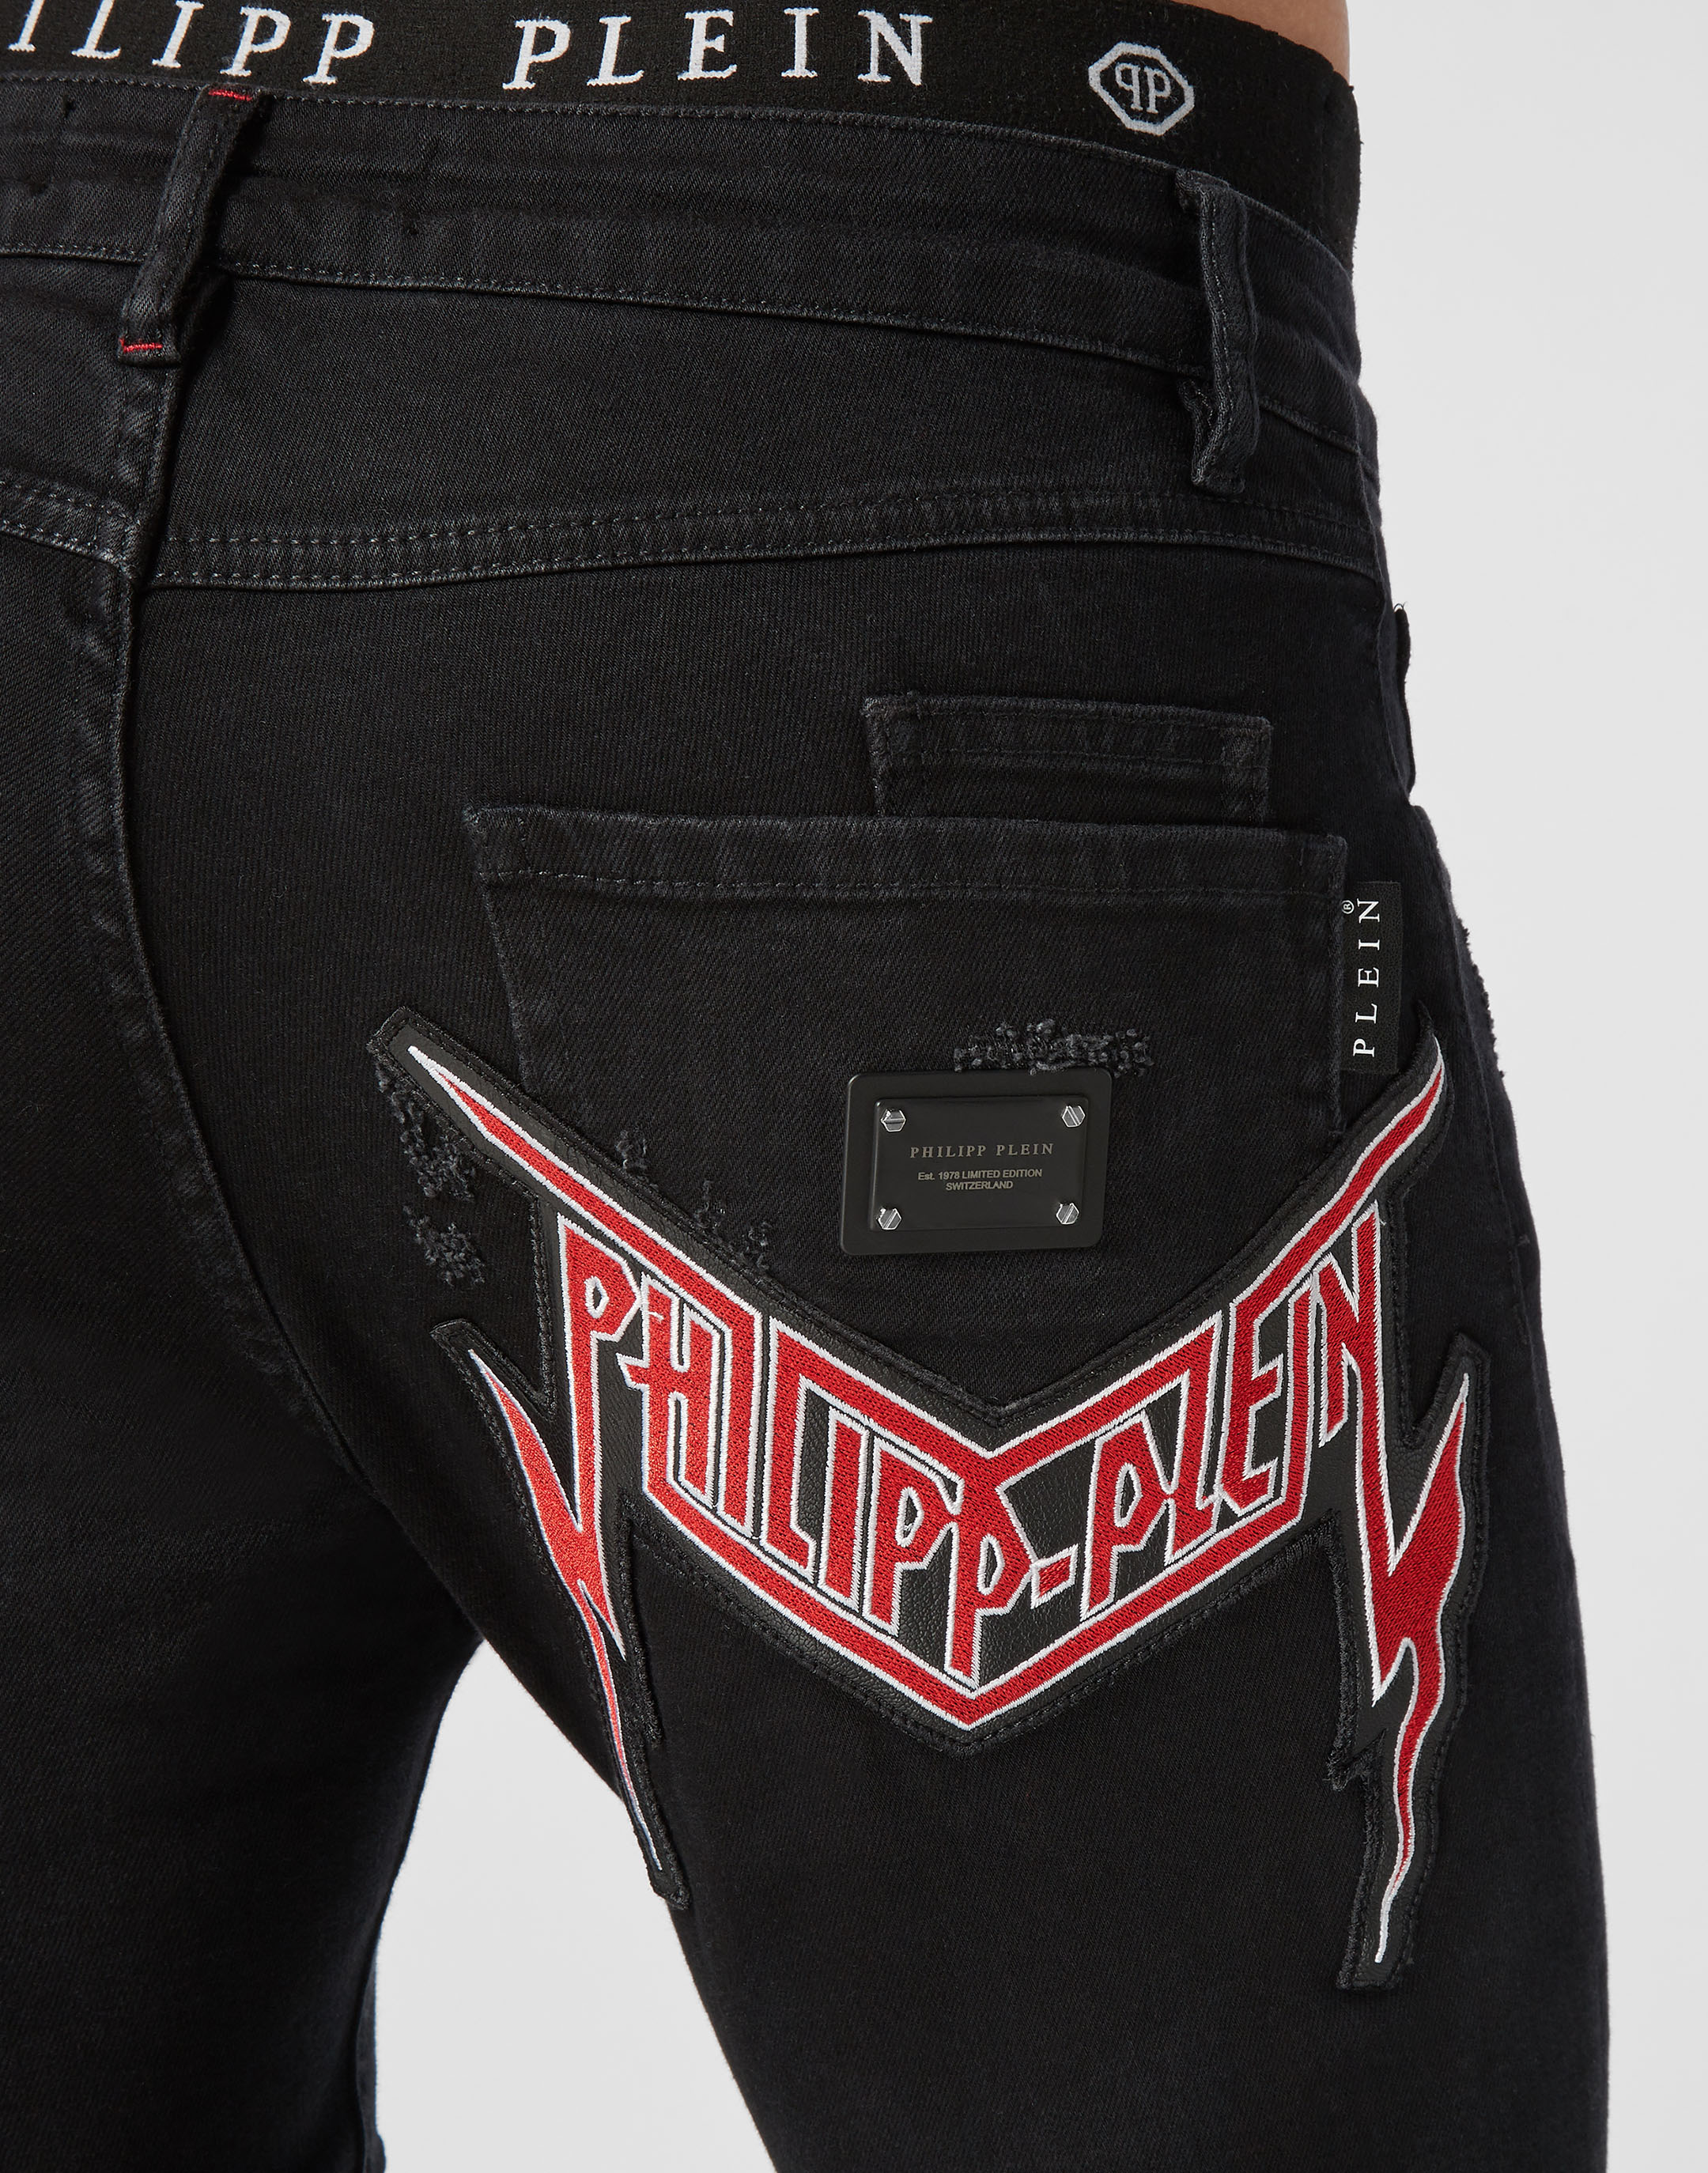 philipp plein jeans limited edition